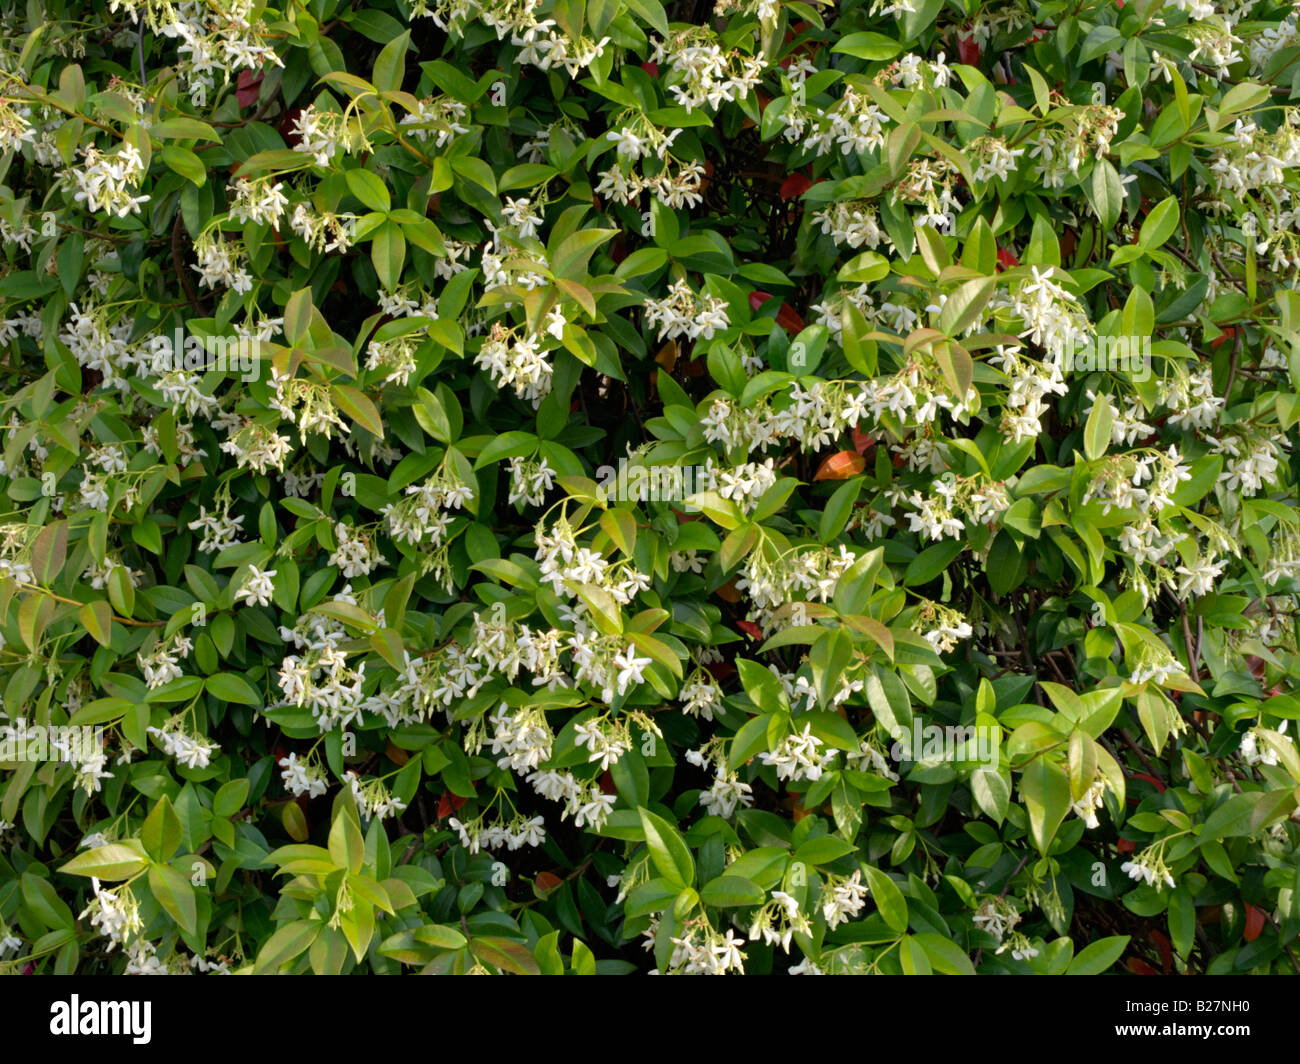 Star jasmine (Trachelospermum jasminoides) Stock Photo